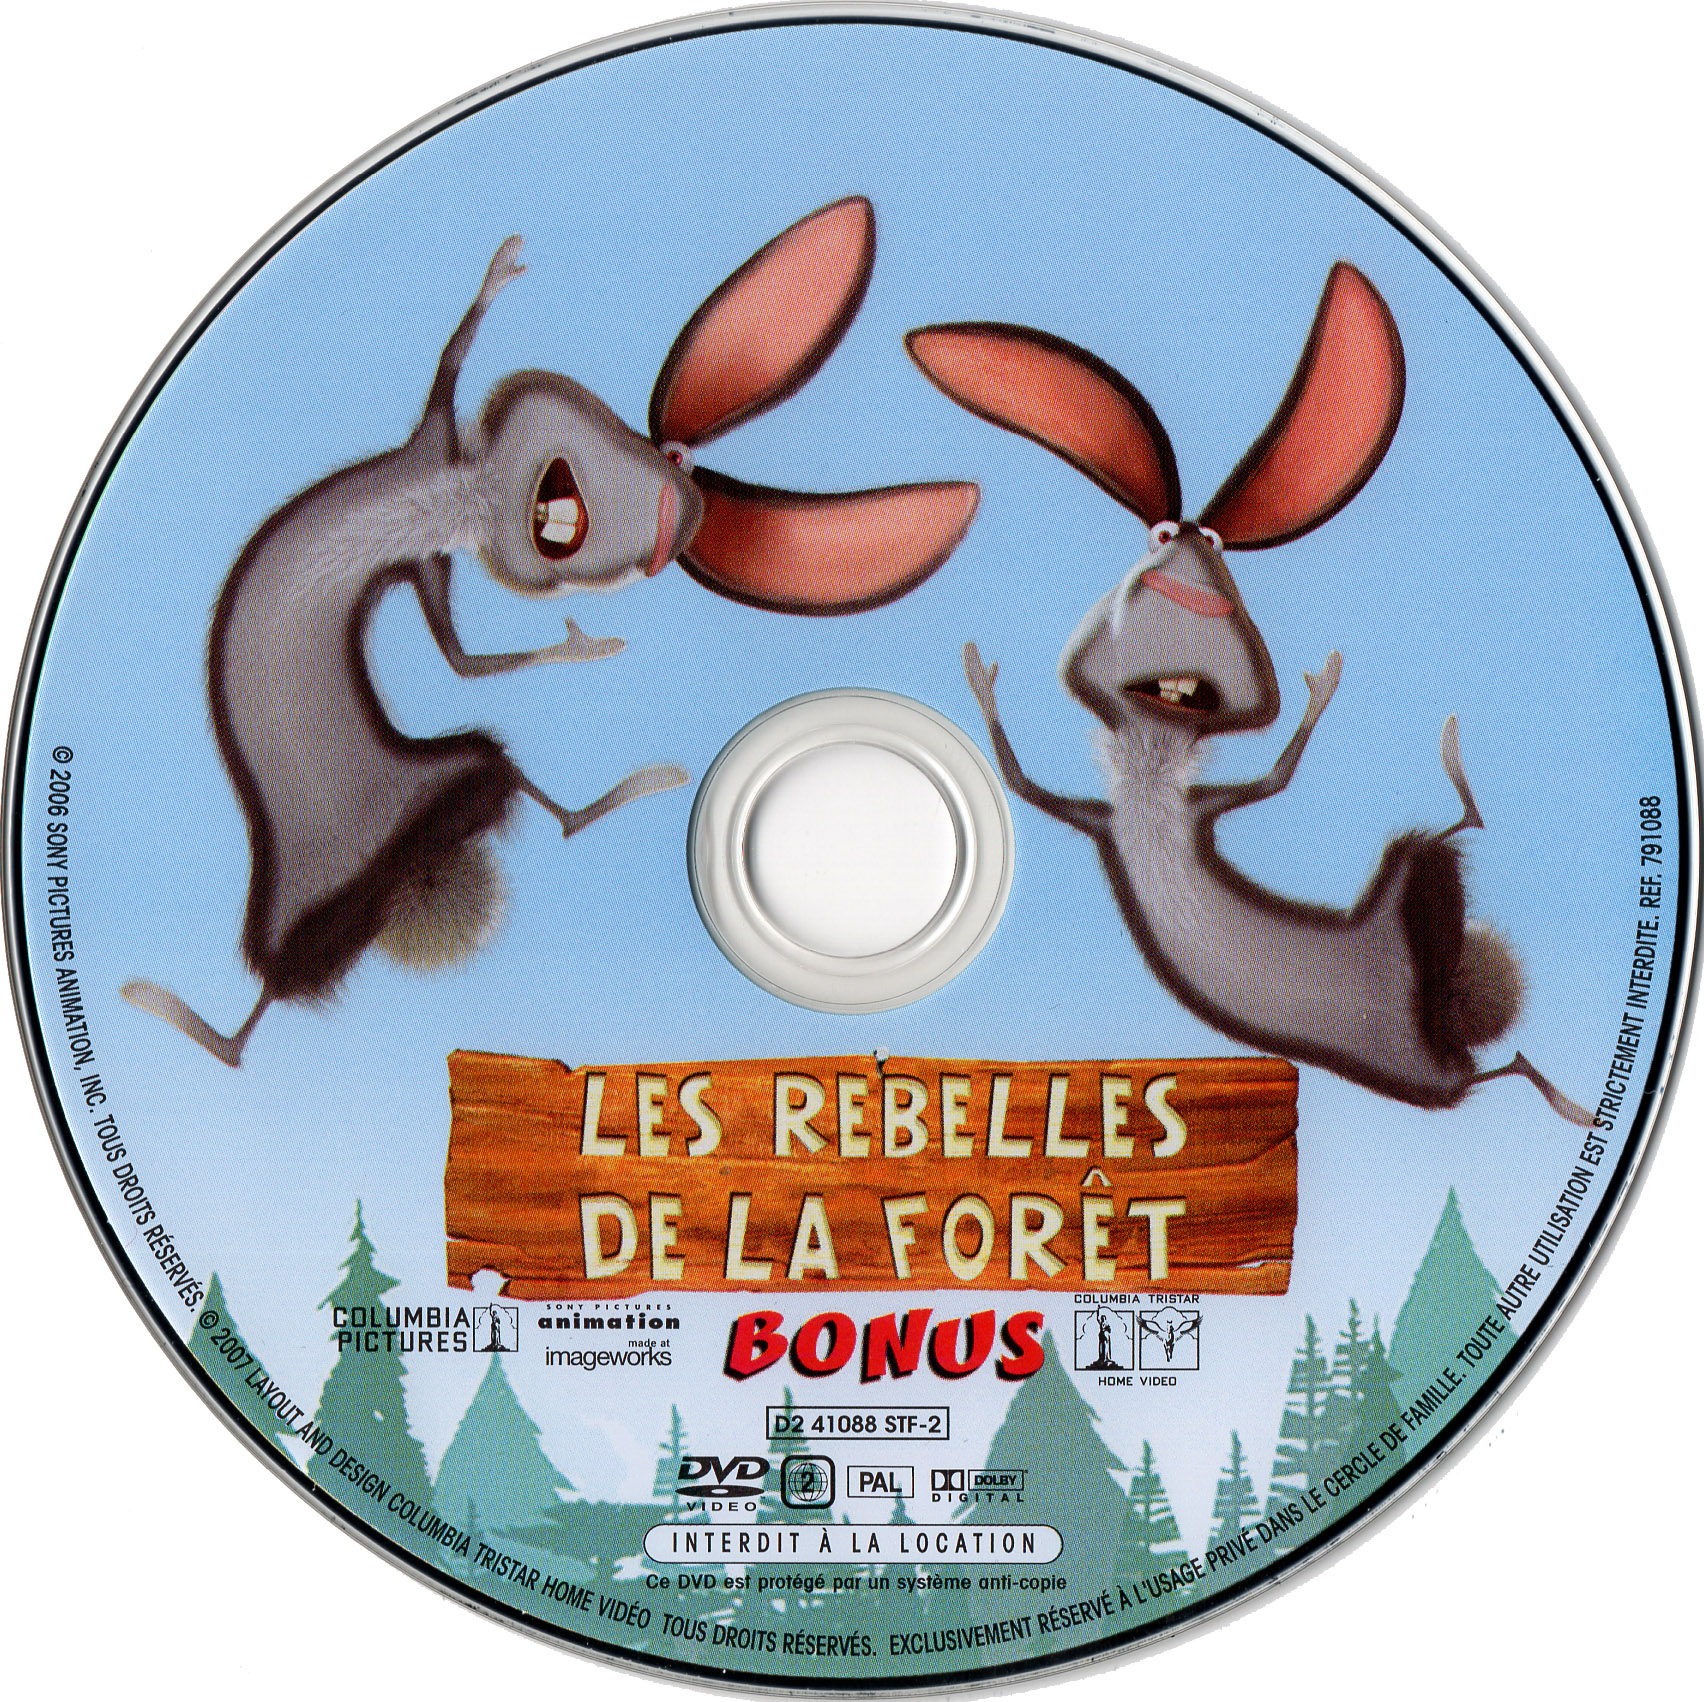 Les rebelles de la foret DISC 2